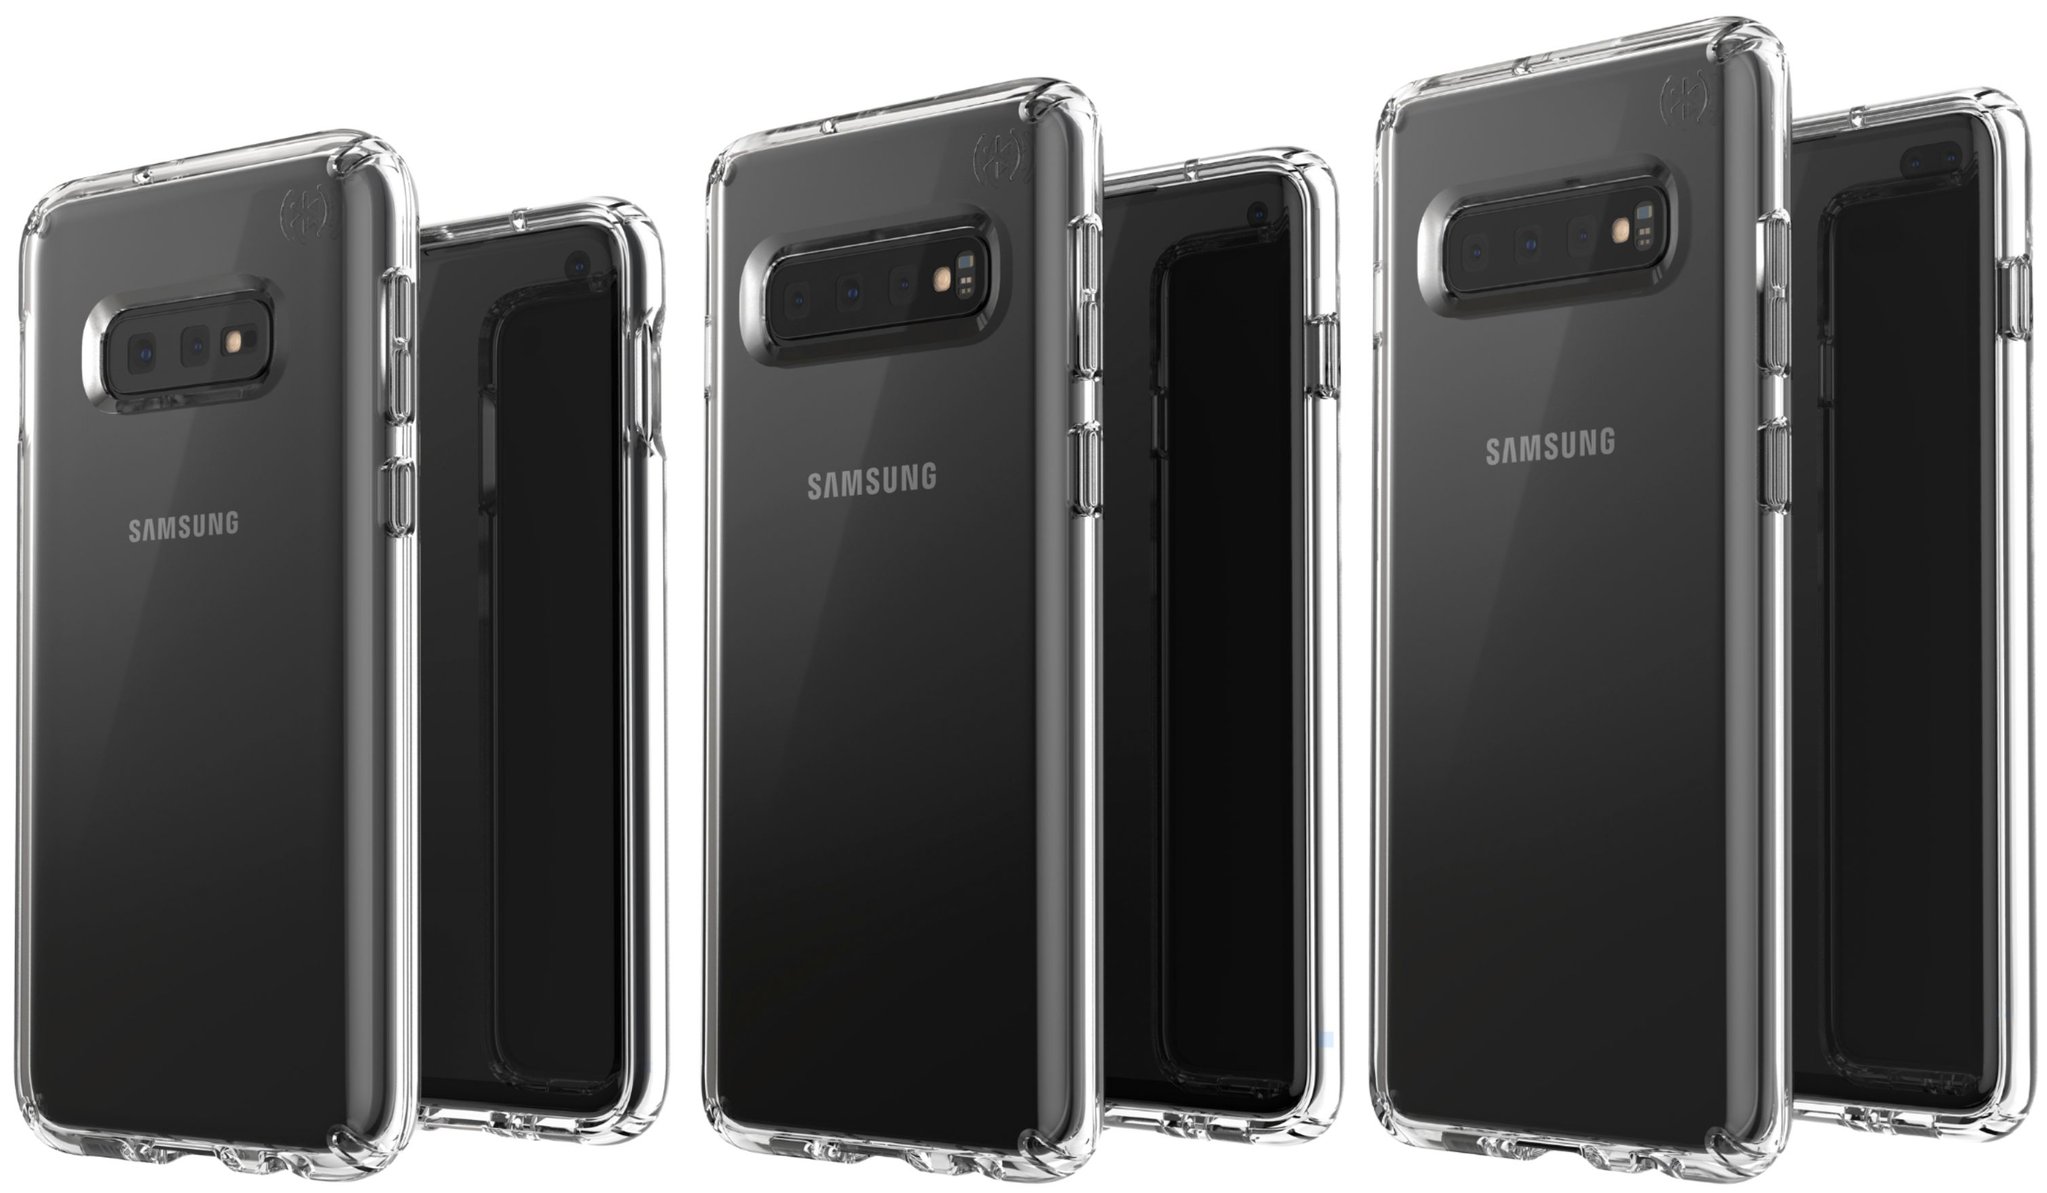 Samsung Galaxy S10e, Galaxy S10, and Galaxy S10+ first impressions